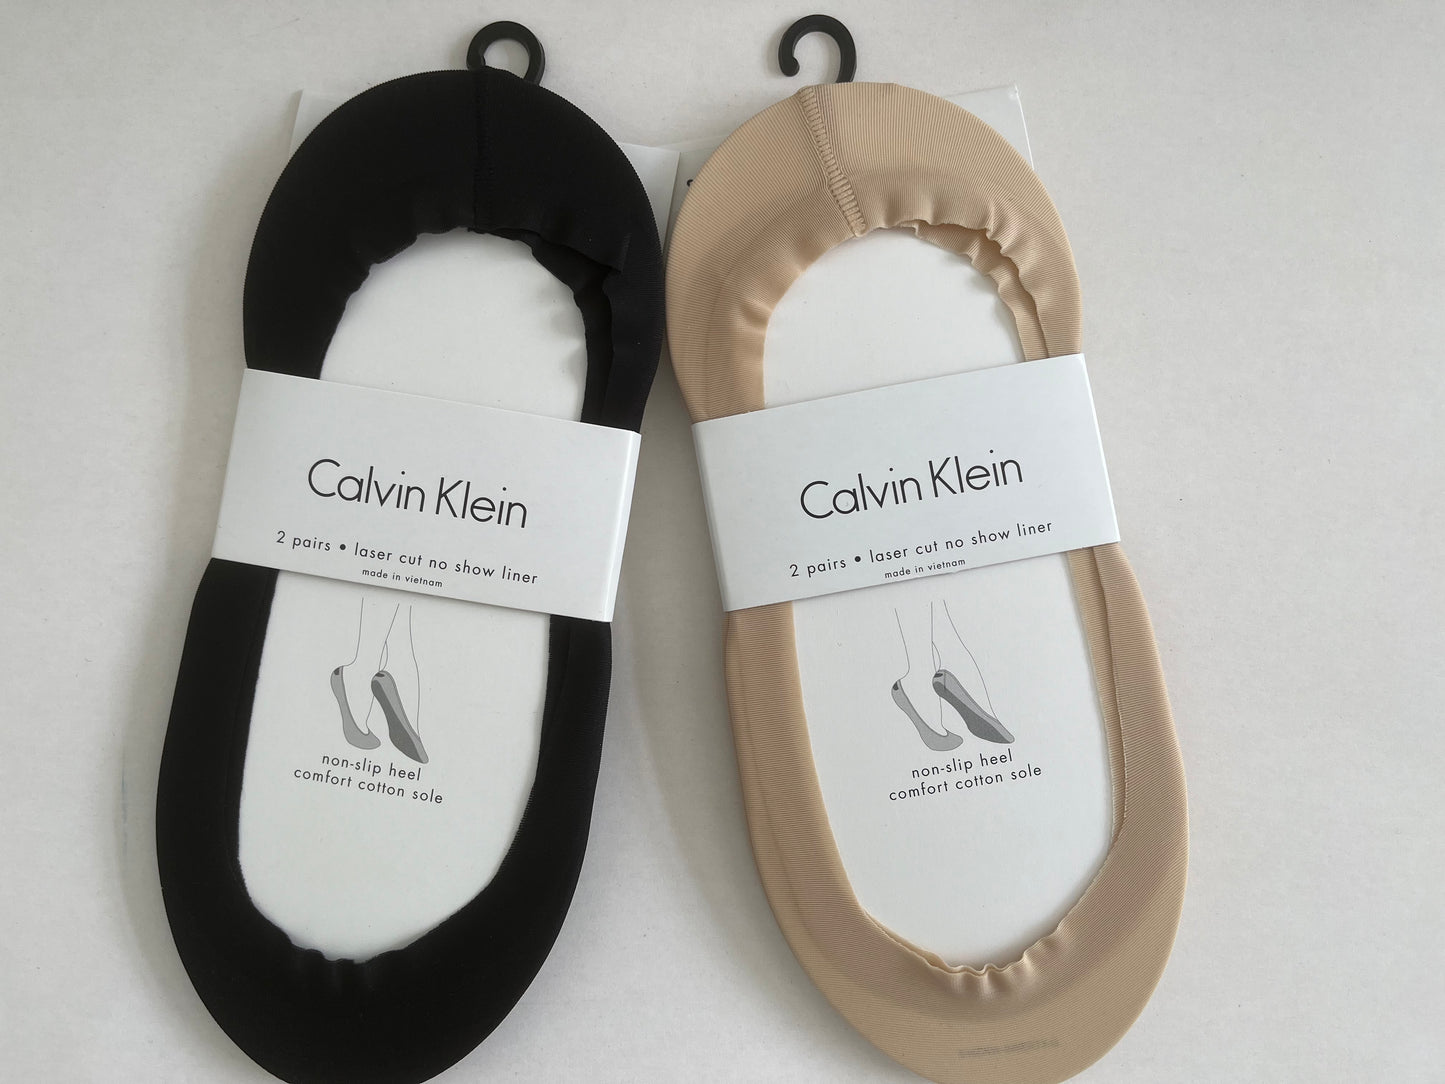 Calvin Klein shoe liner